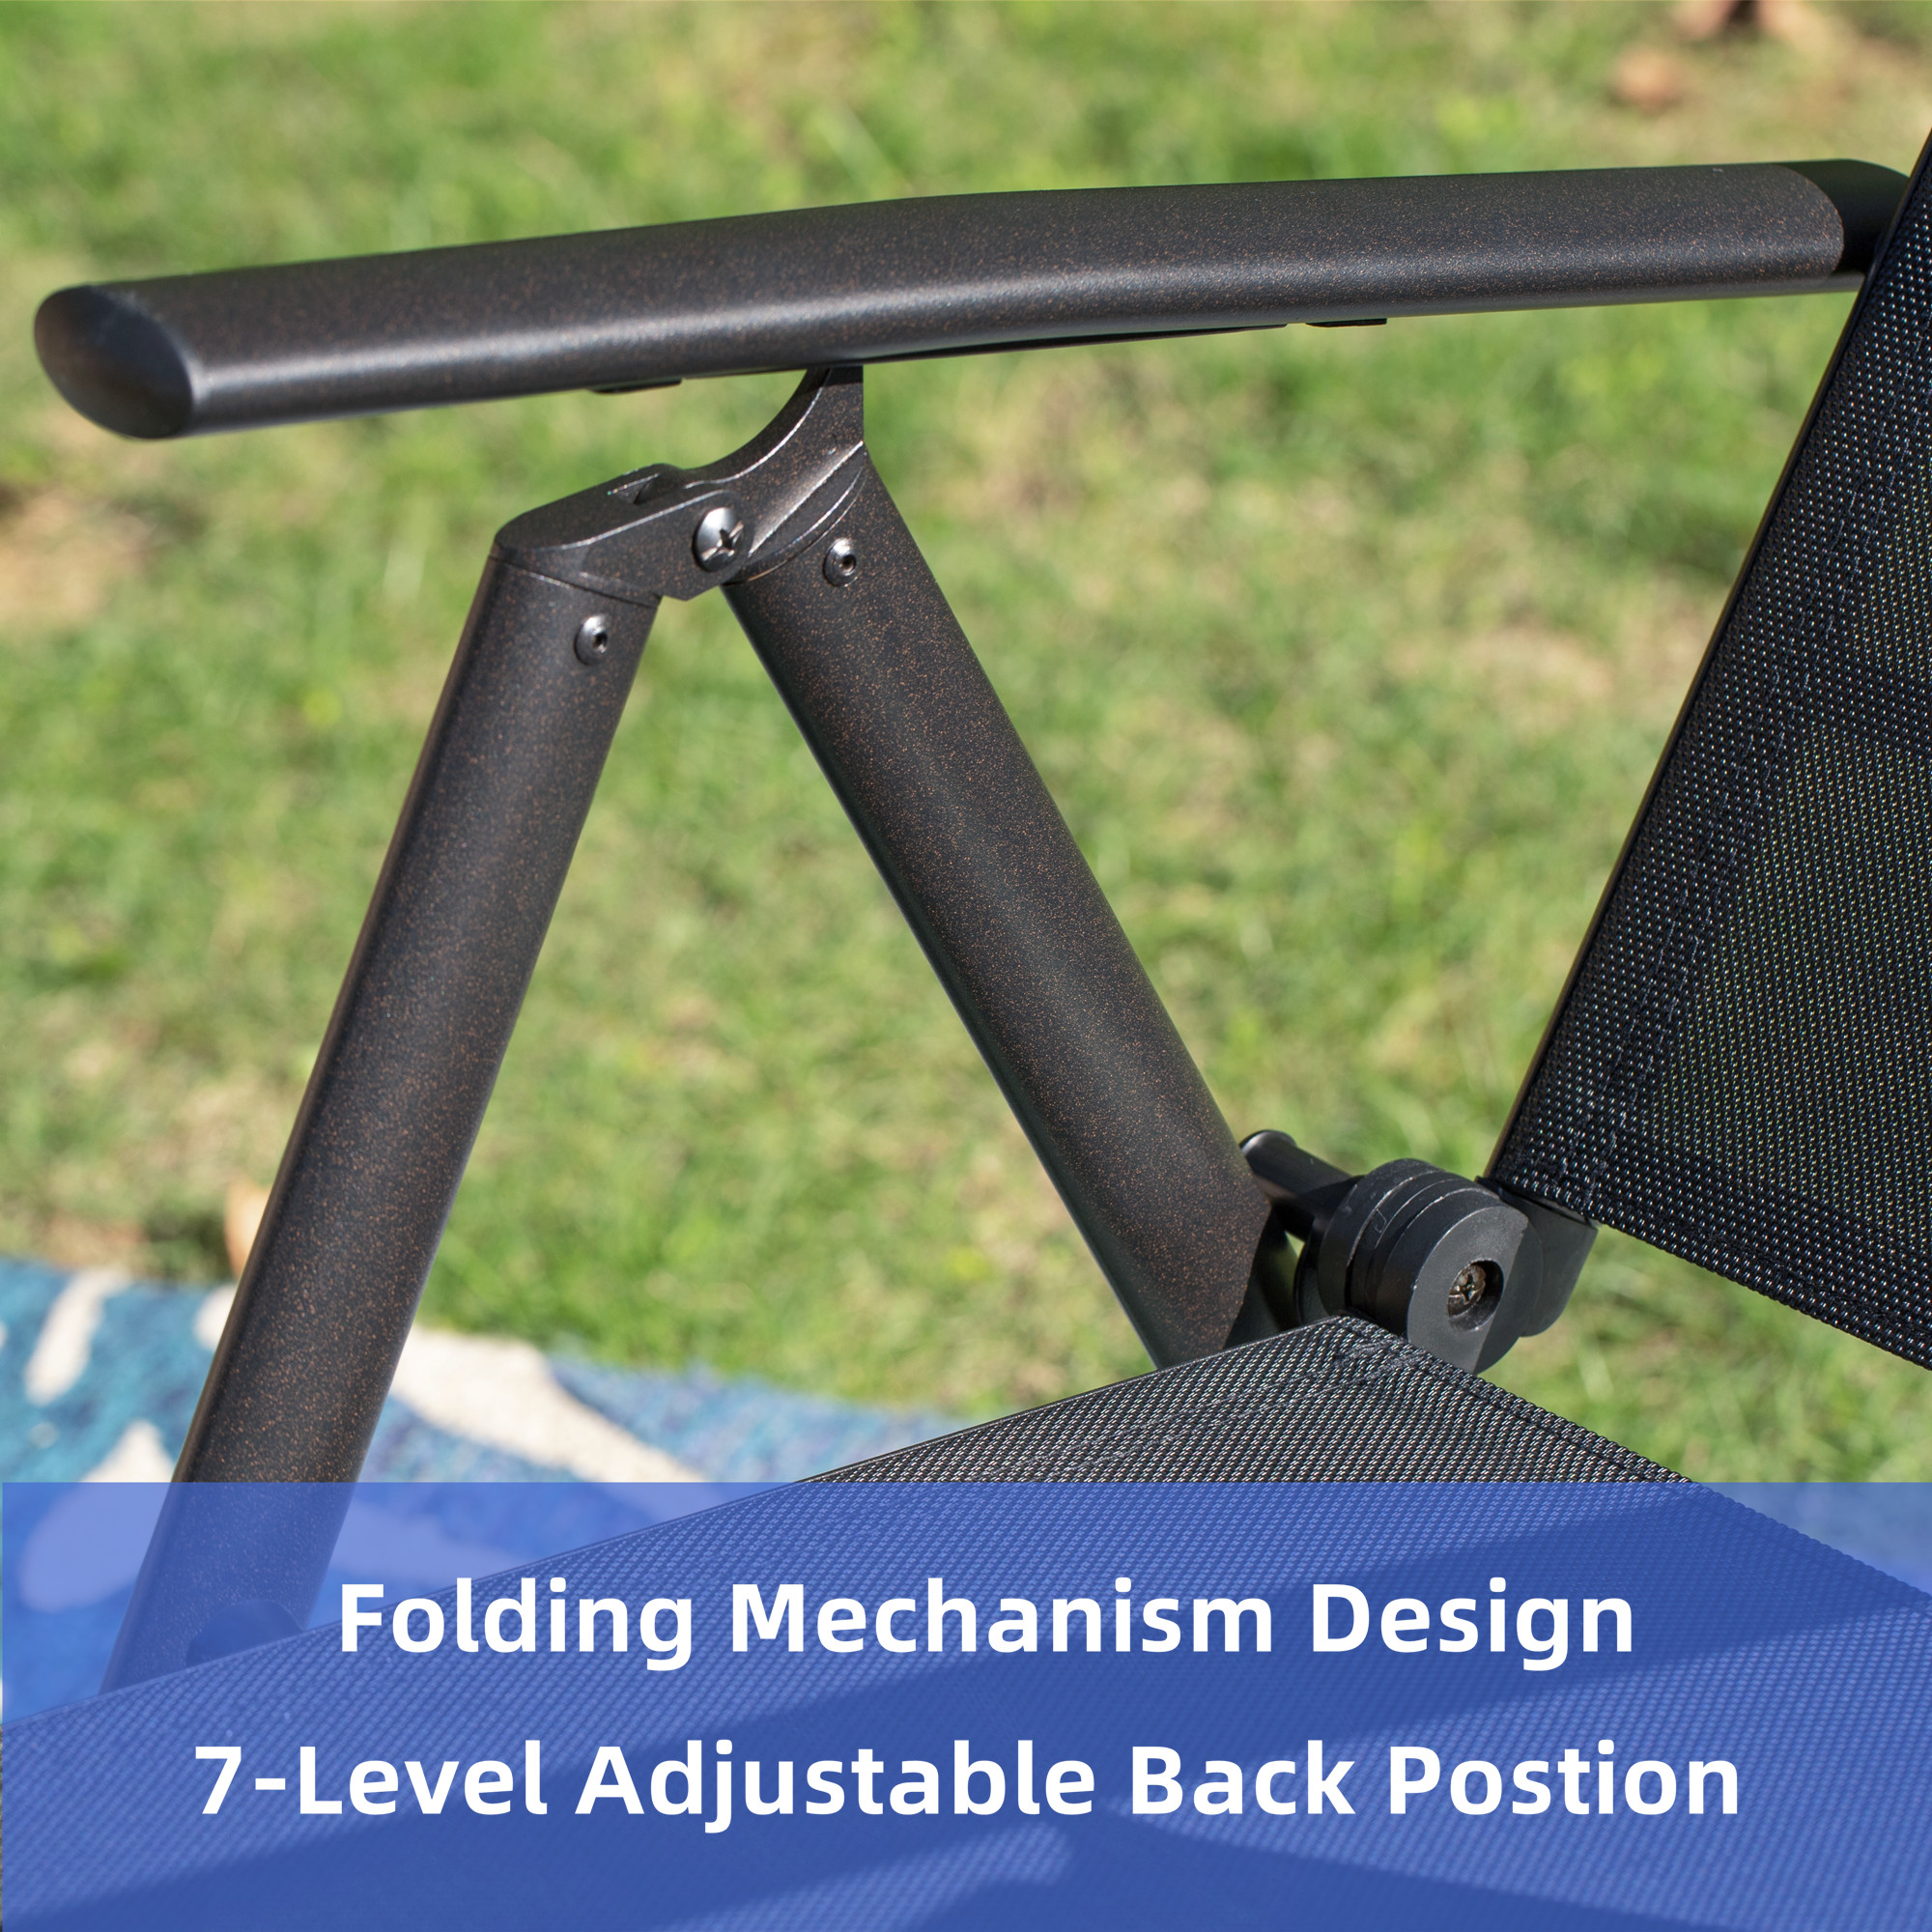 MF Studio 2-Piece Aluminum Outdoor Patio Folding Chairs with Textilene Seat, Black - image 2 of 10